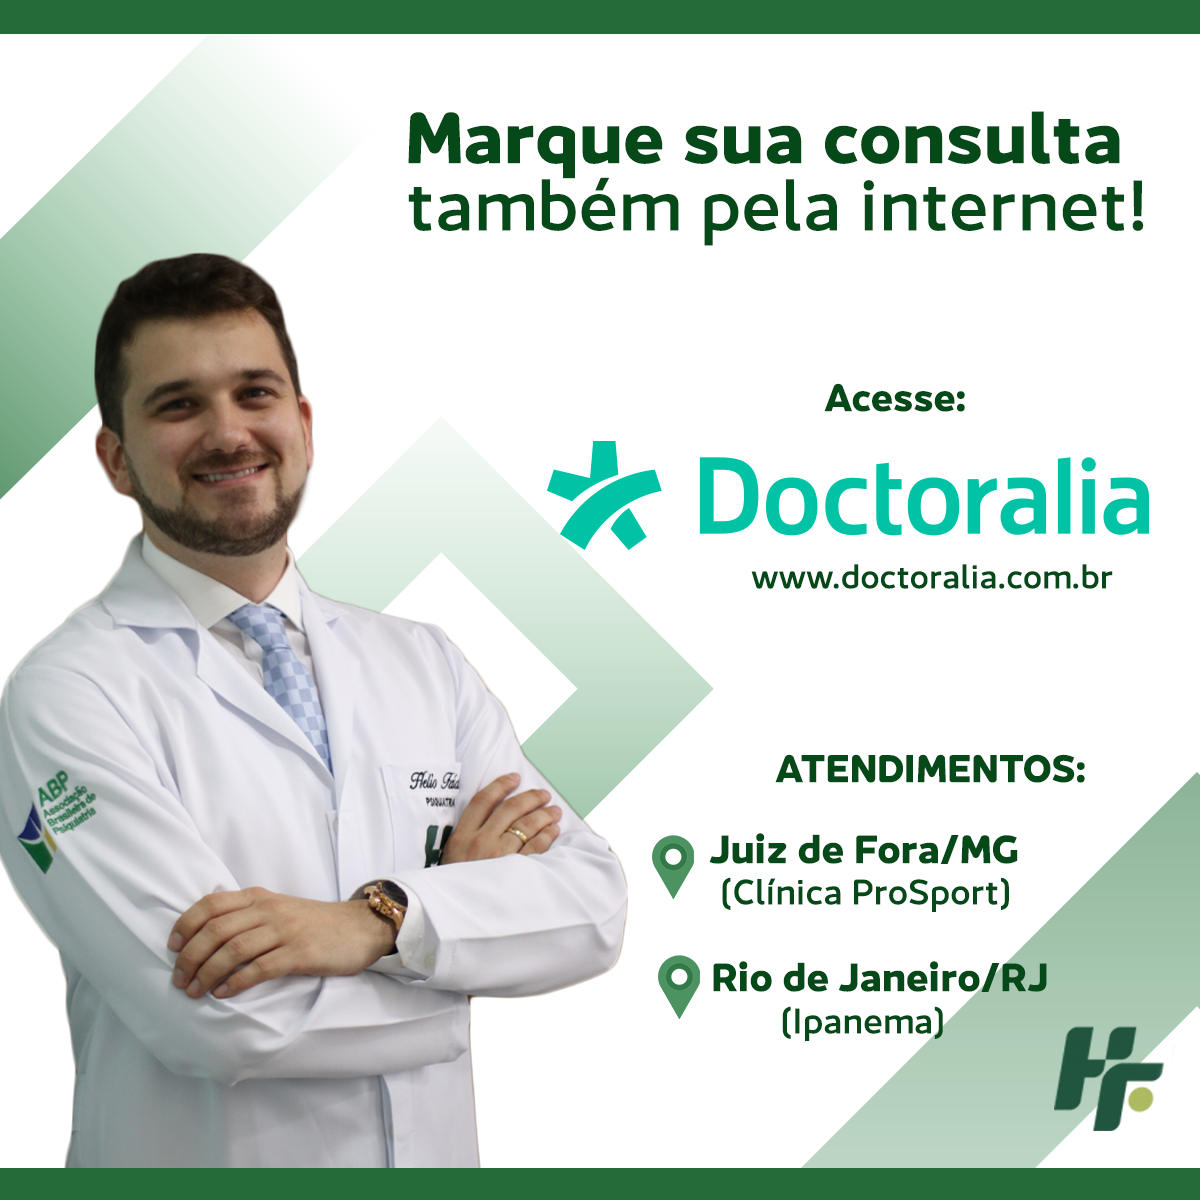 Atendimentos doctoralia - Marque sua consulta pelo Doctoralia